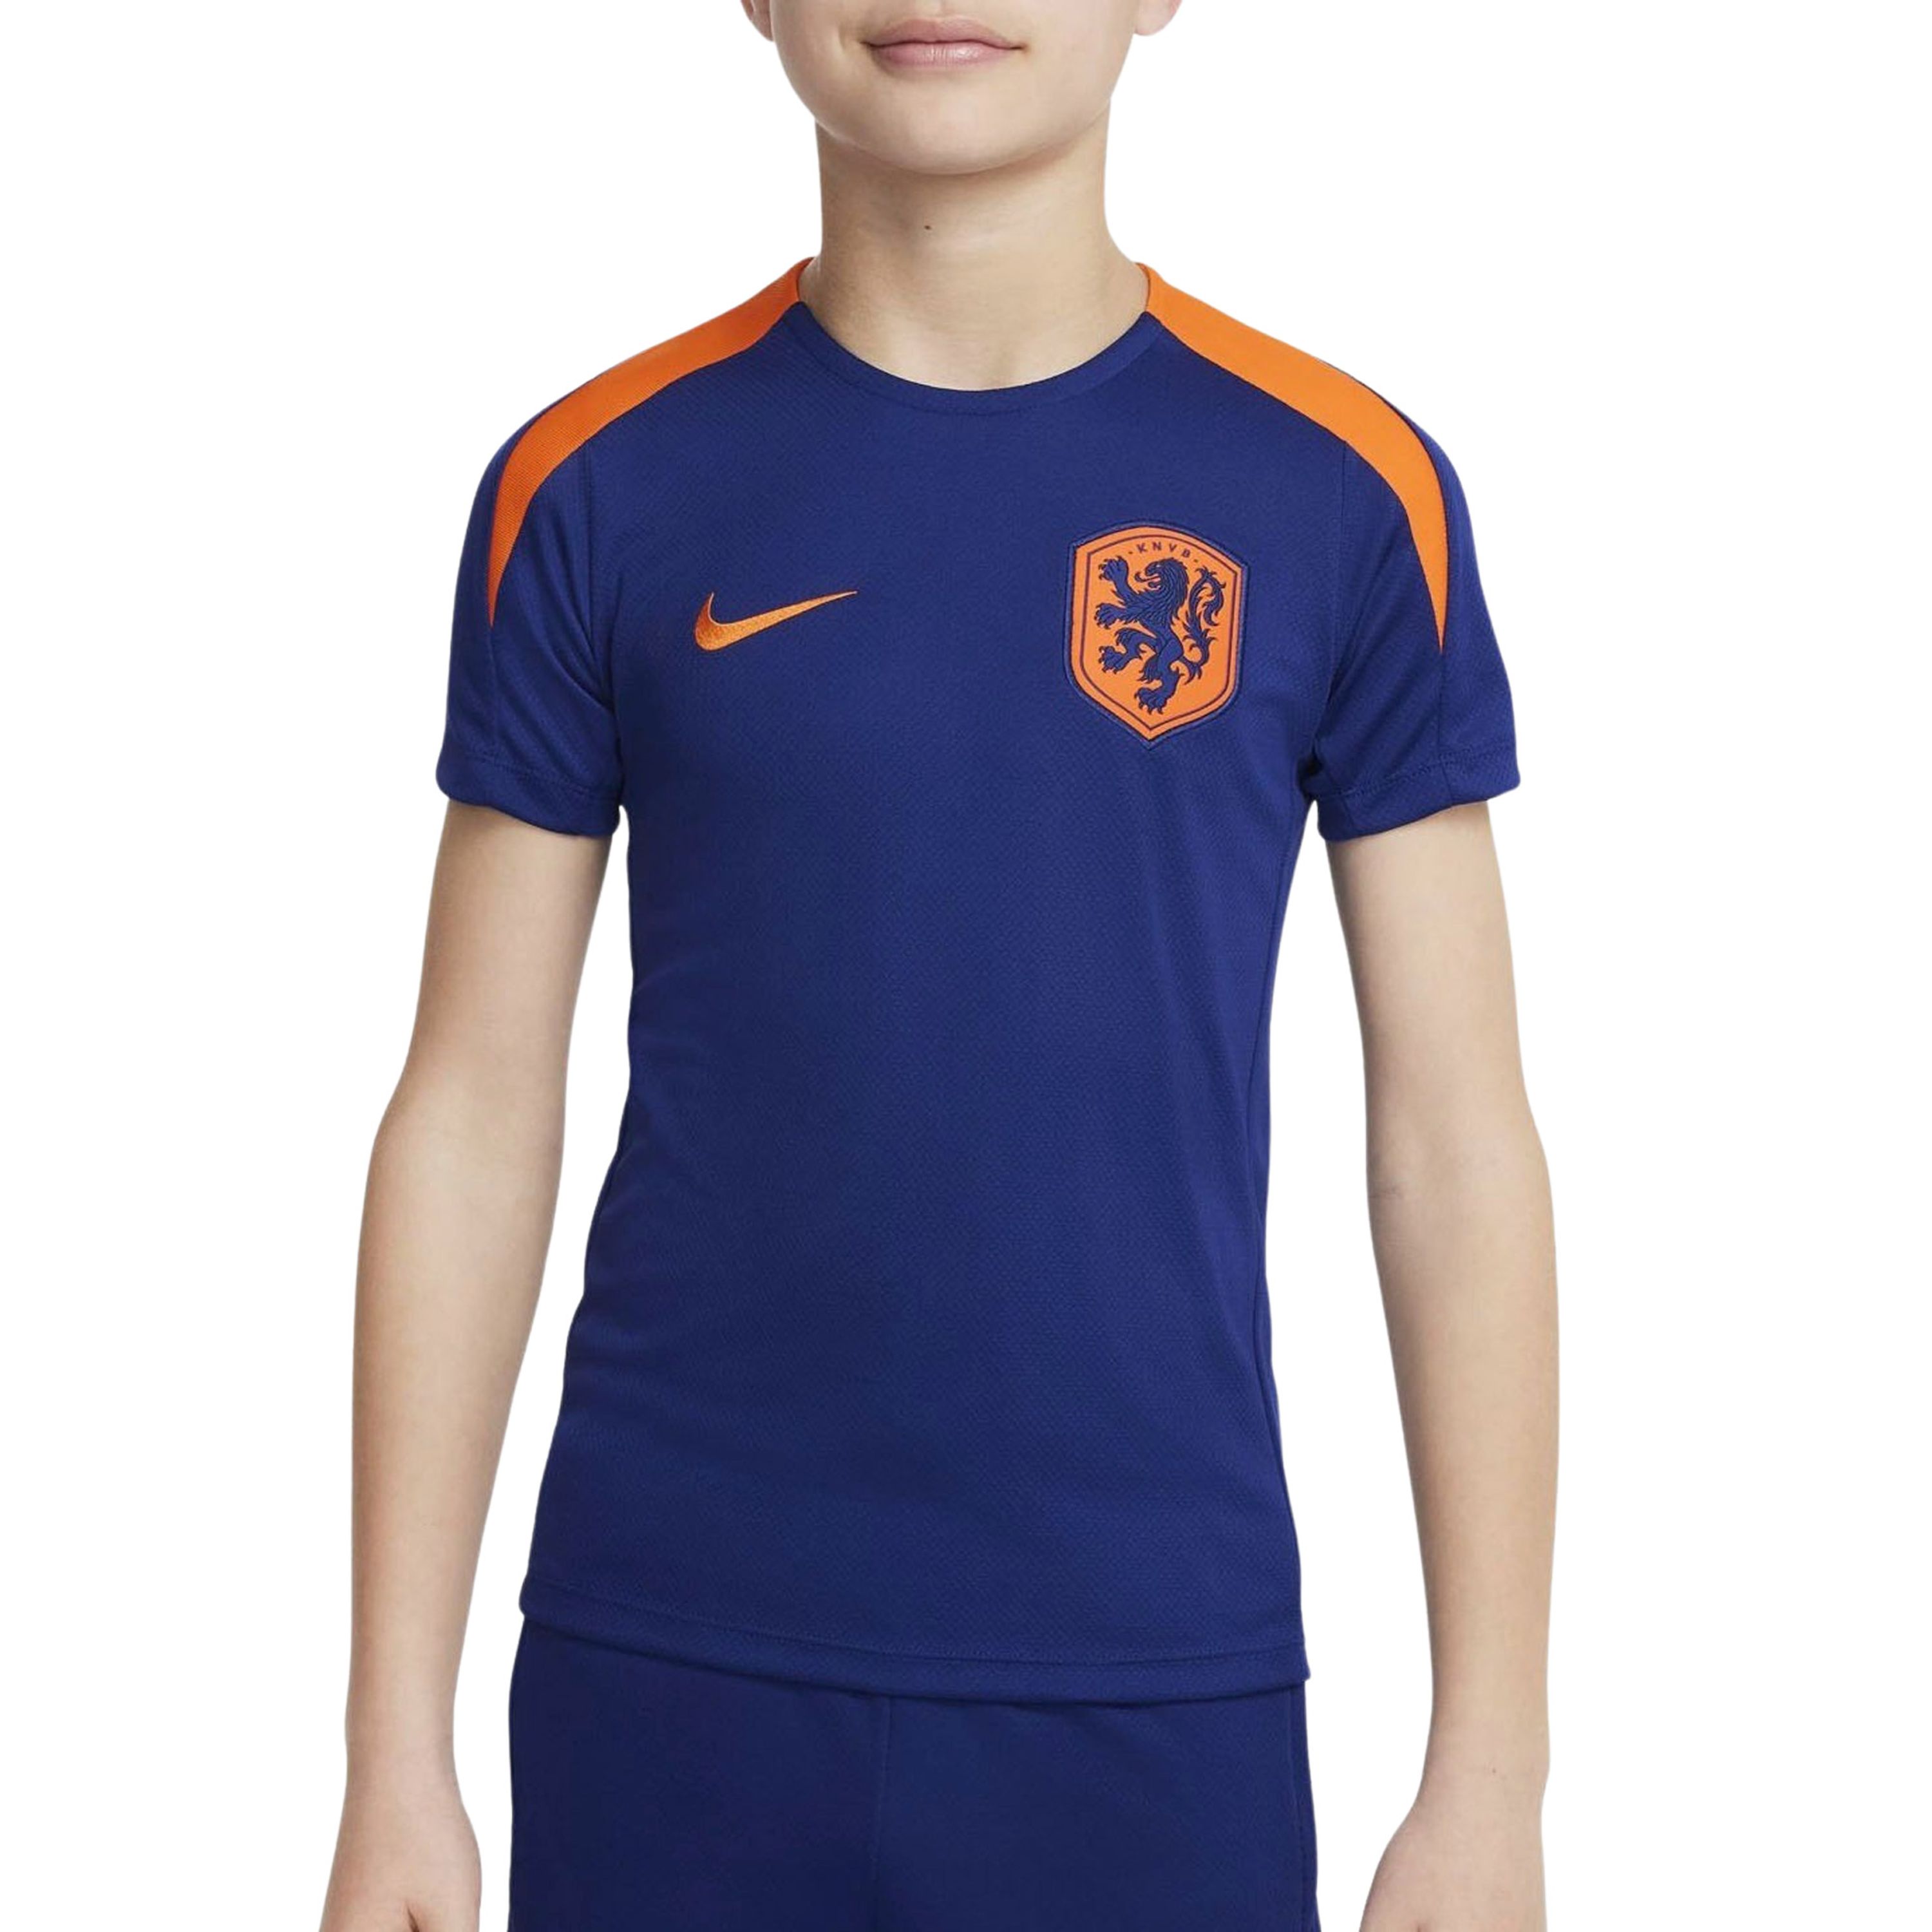 Nike Nederland Strike Dri-FIT knit voetbaltop met korte mouwen voor kids Blauw